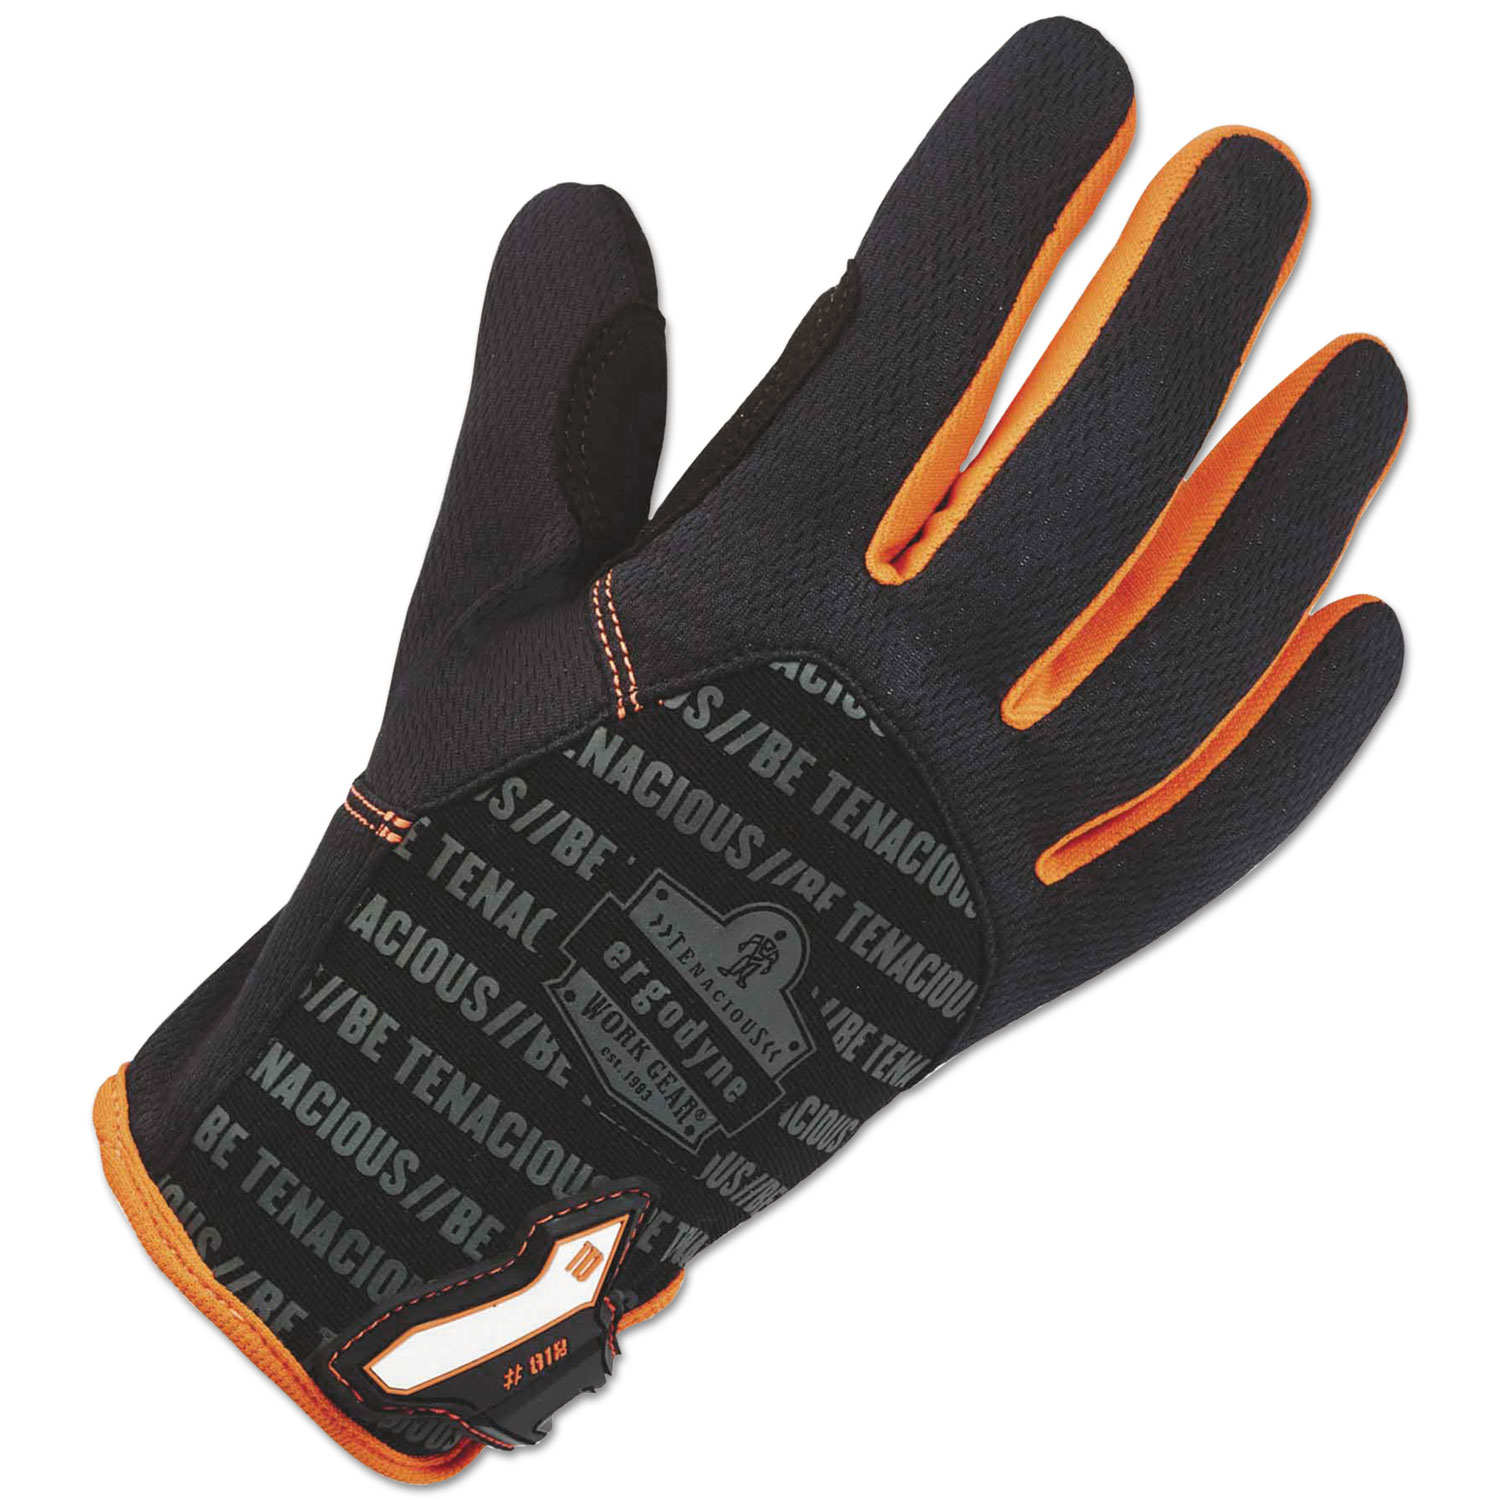  ergodyne 17172 ProFlex 812 Standard Utility Gloves, Black, Small, 1 Pair (EGO17172) 